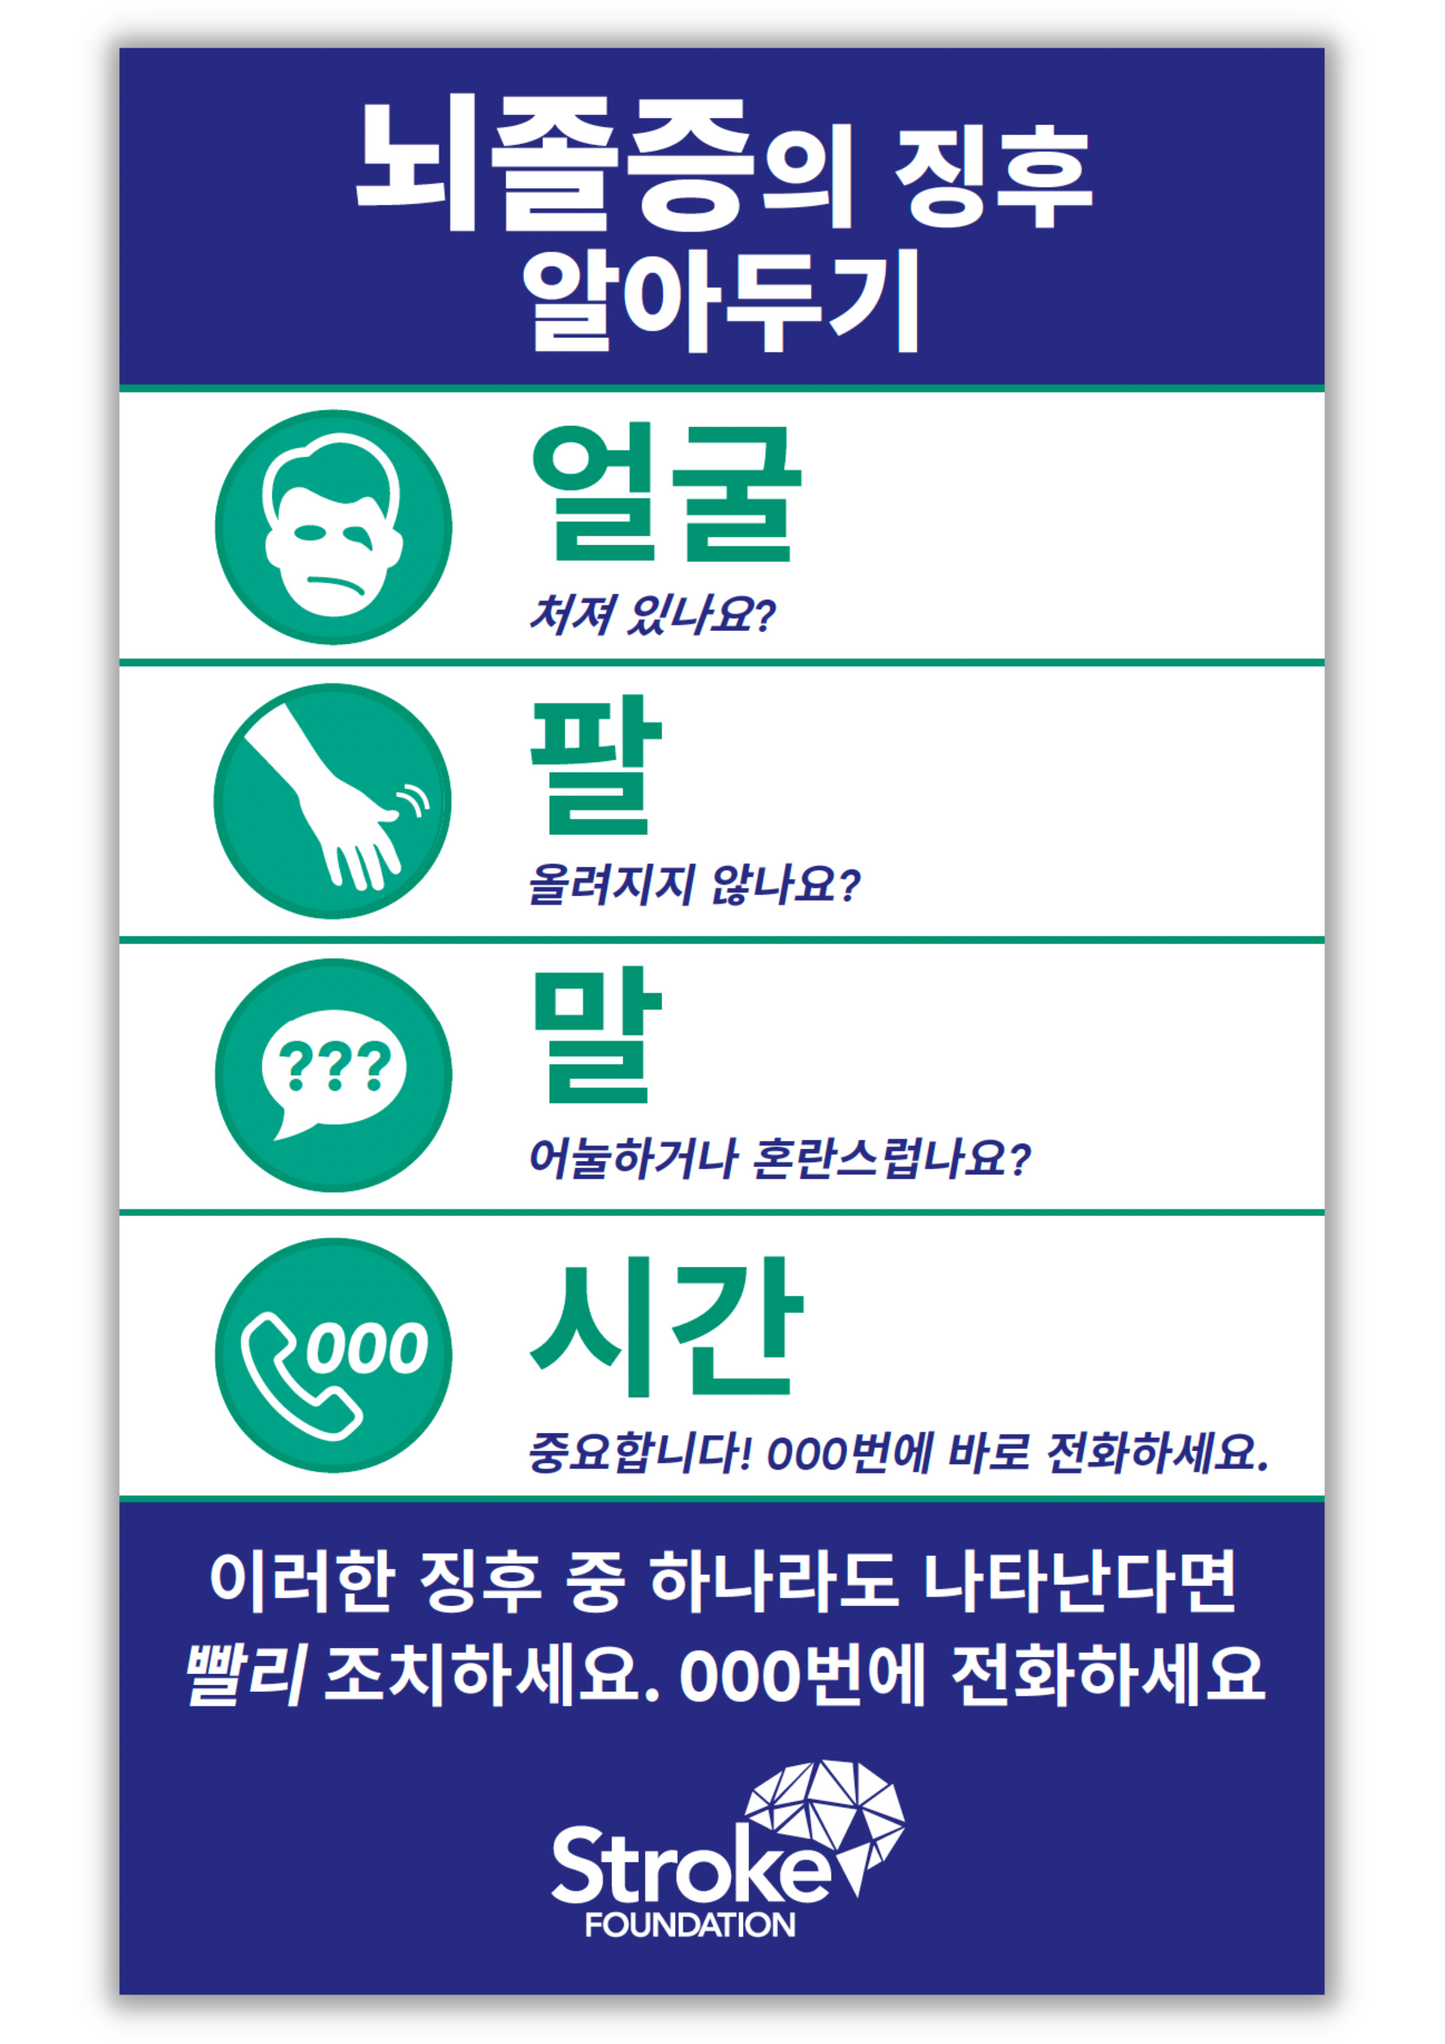 F.A.S.T. fridge magnets - 한국어 (Korean) version (20 pack)